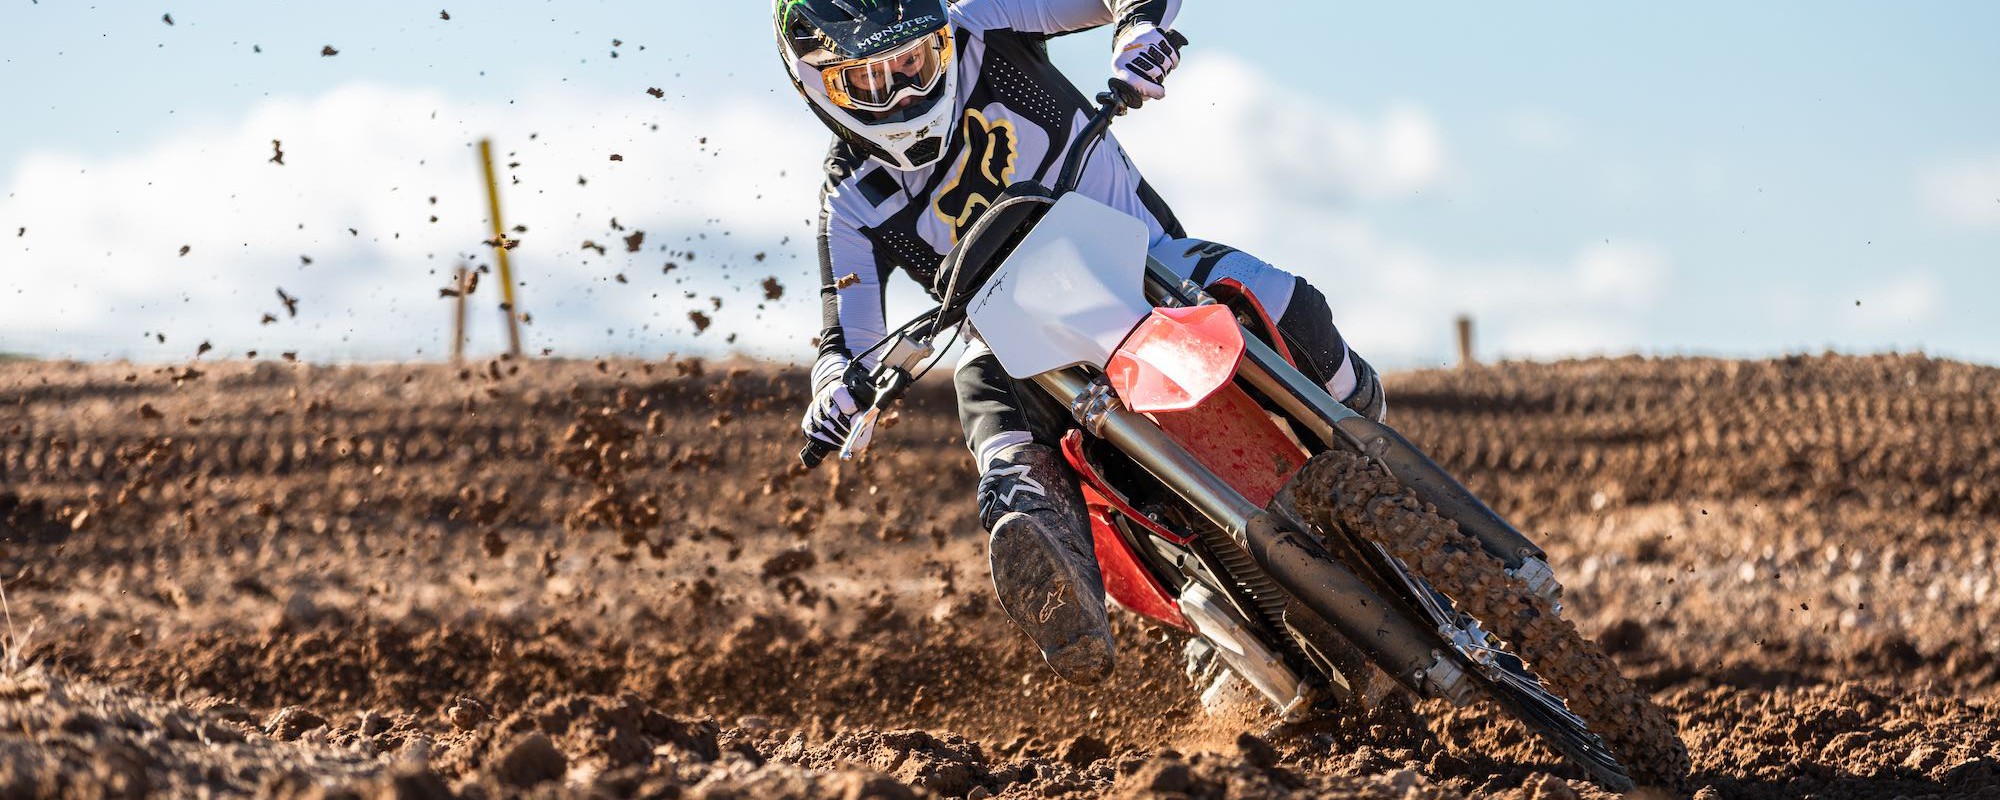 motorbike racing rider competing on stark vary in rough terrain